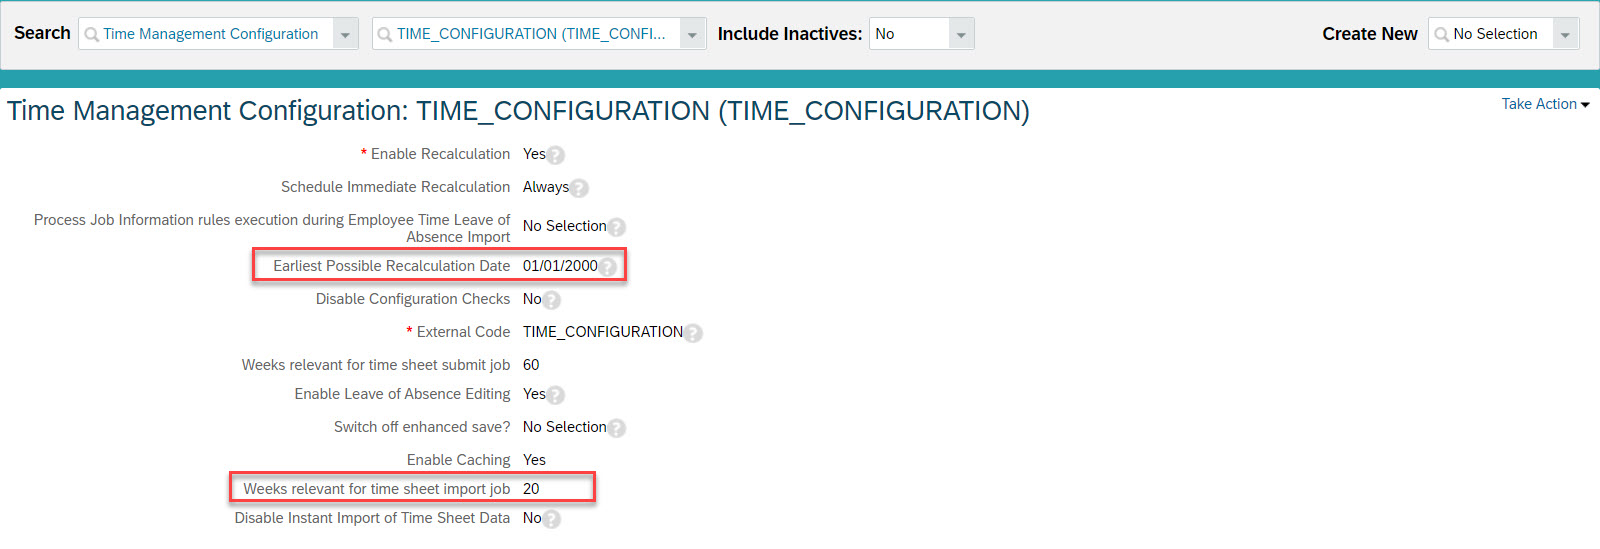 Time Management Configuraiton Object.jpg